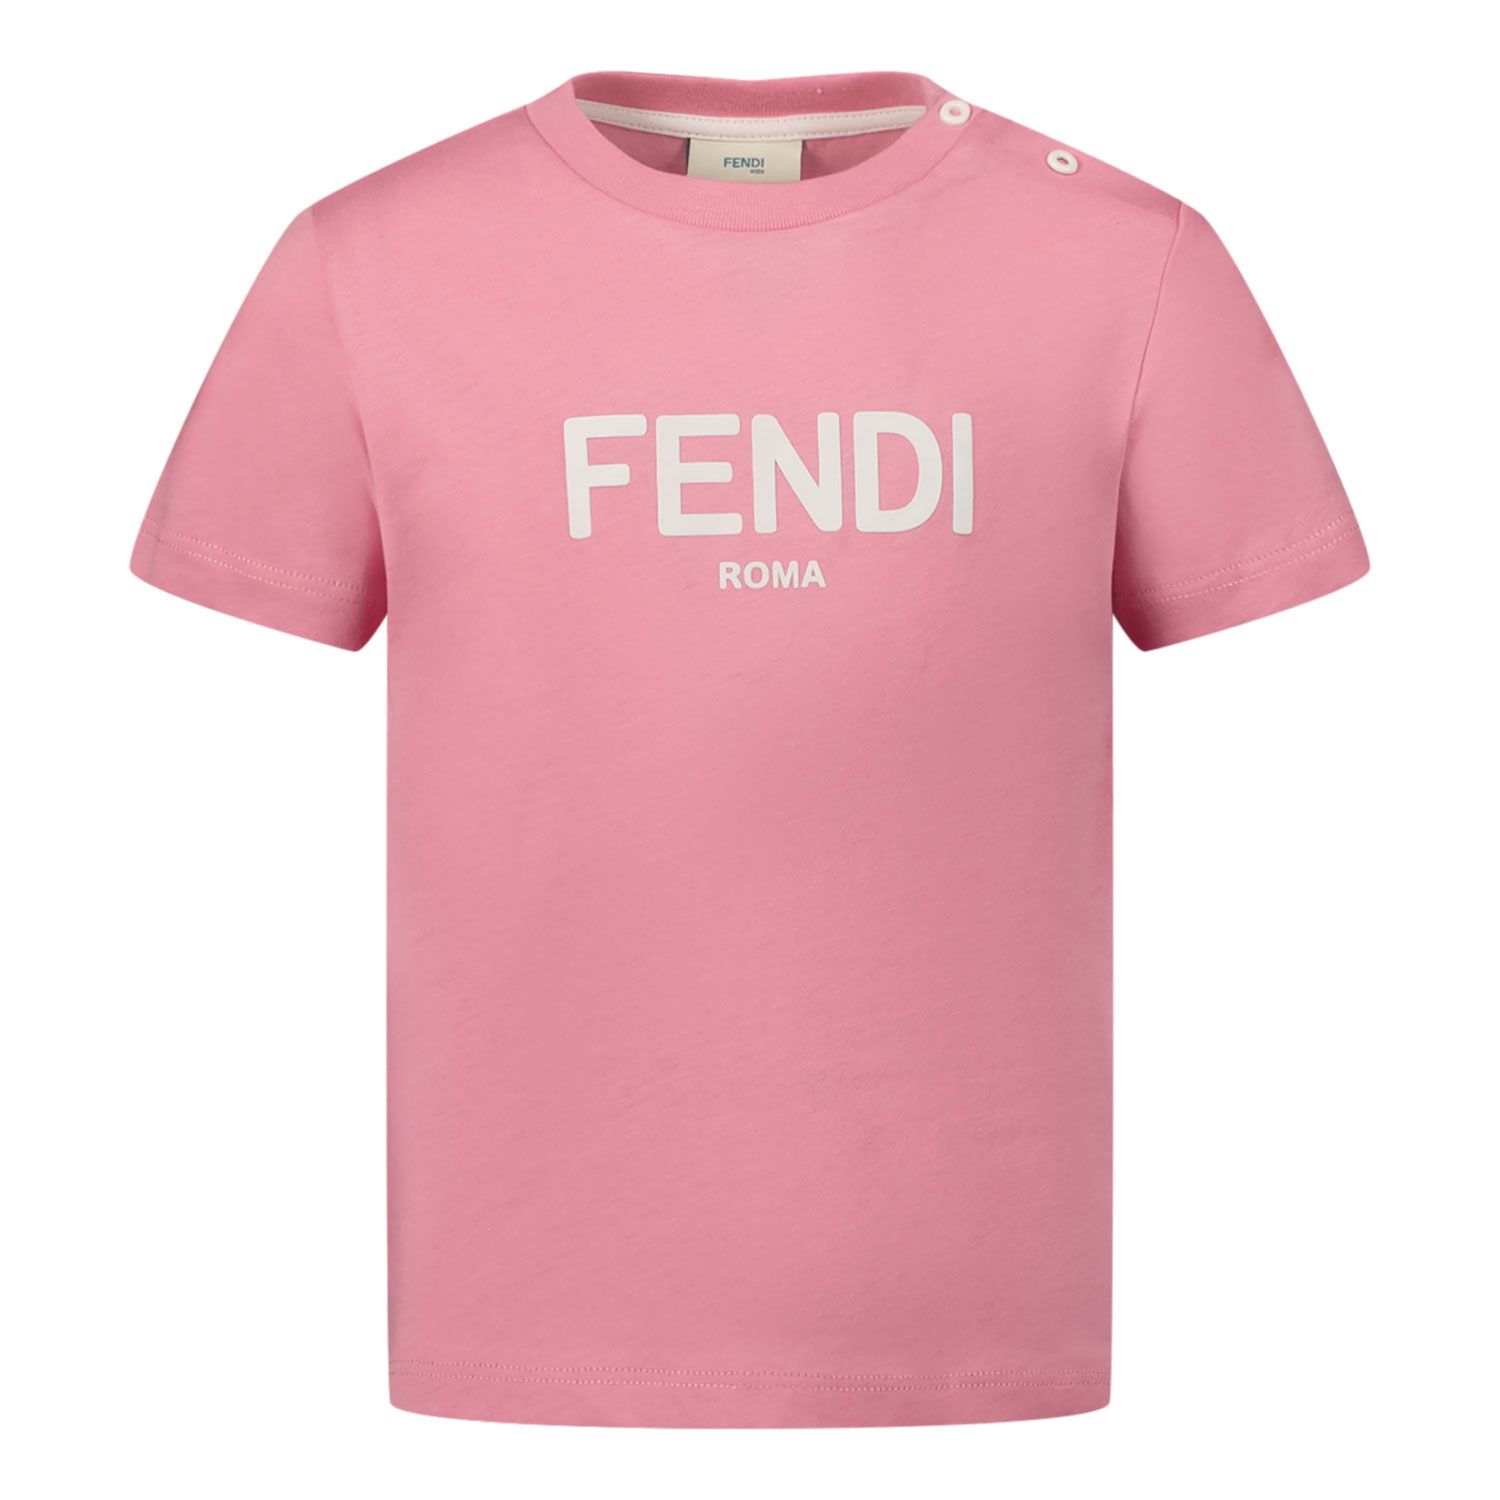 Afbeelding van Fendi BUI029 7AJ baby t-shirt roze